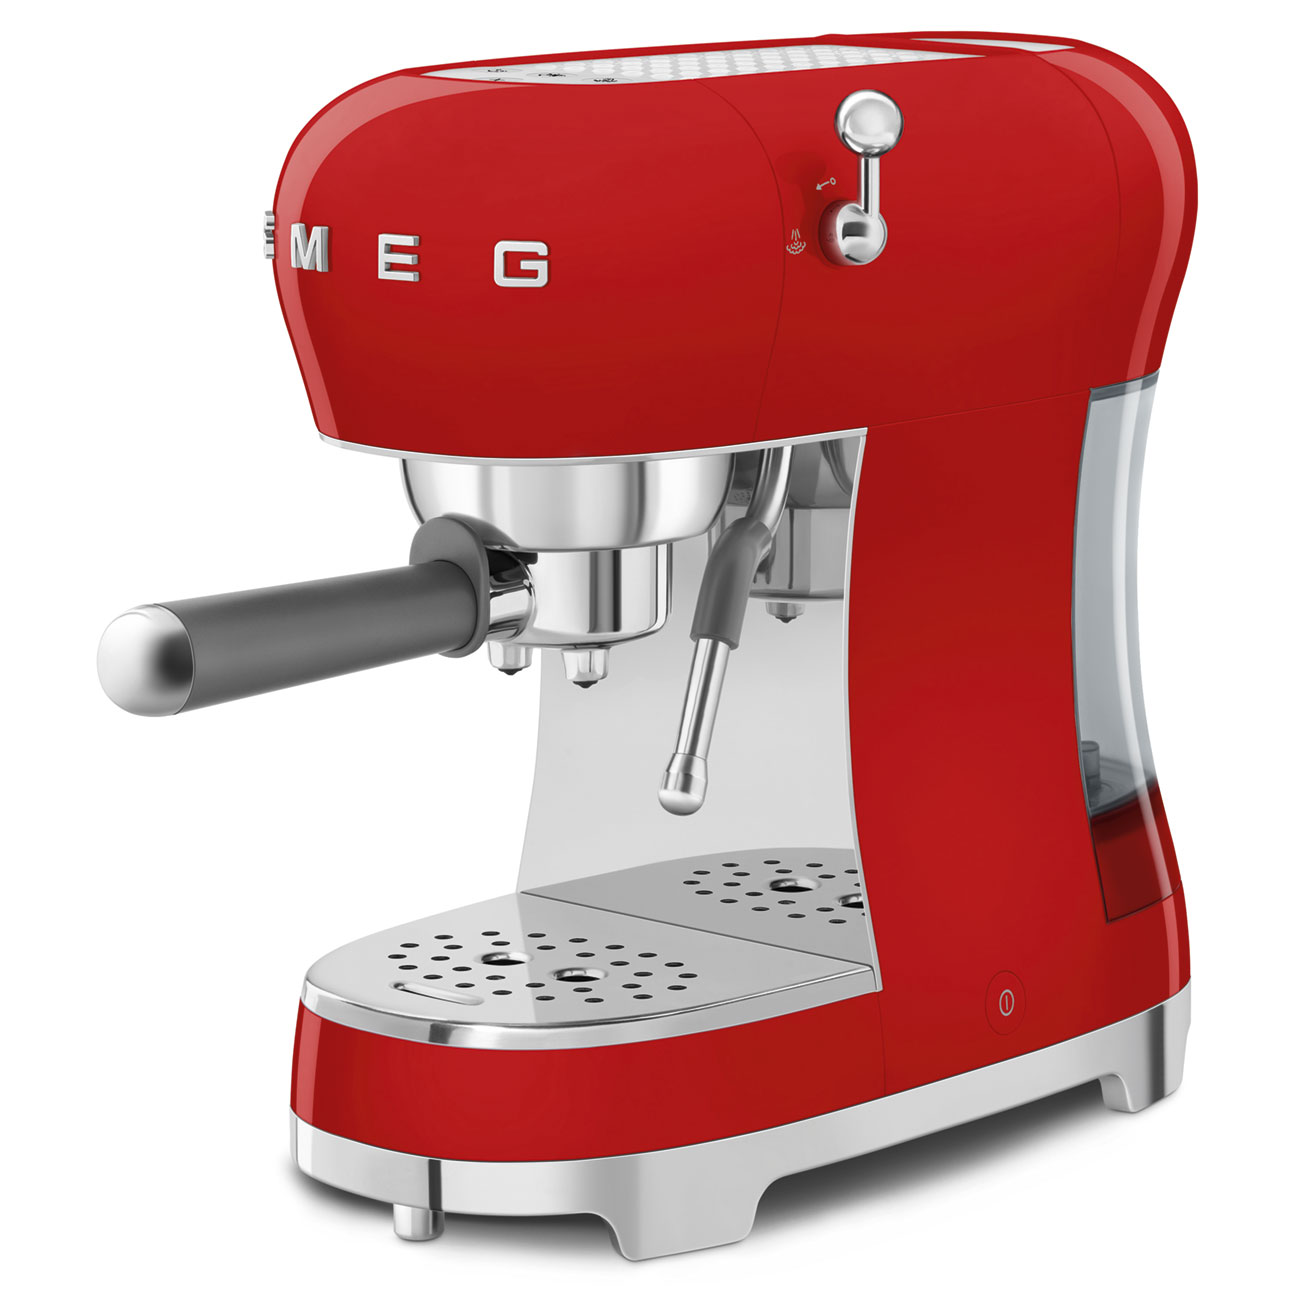 Smeg Red Espresso Manual Coffee Machine with Steam Wand_4